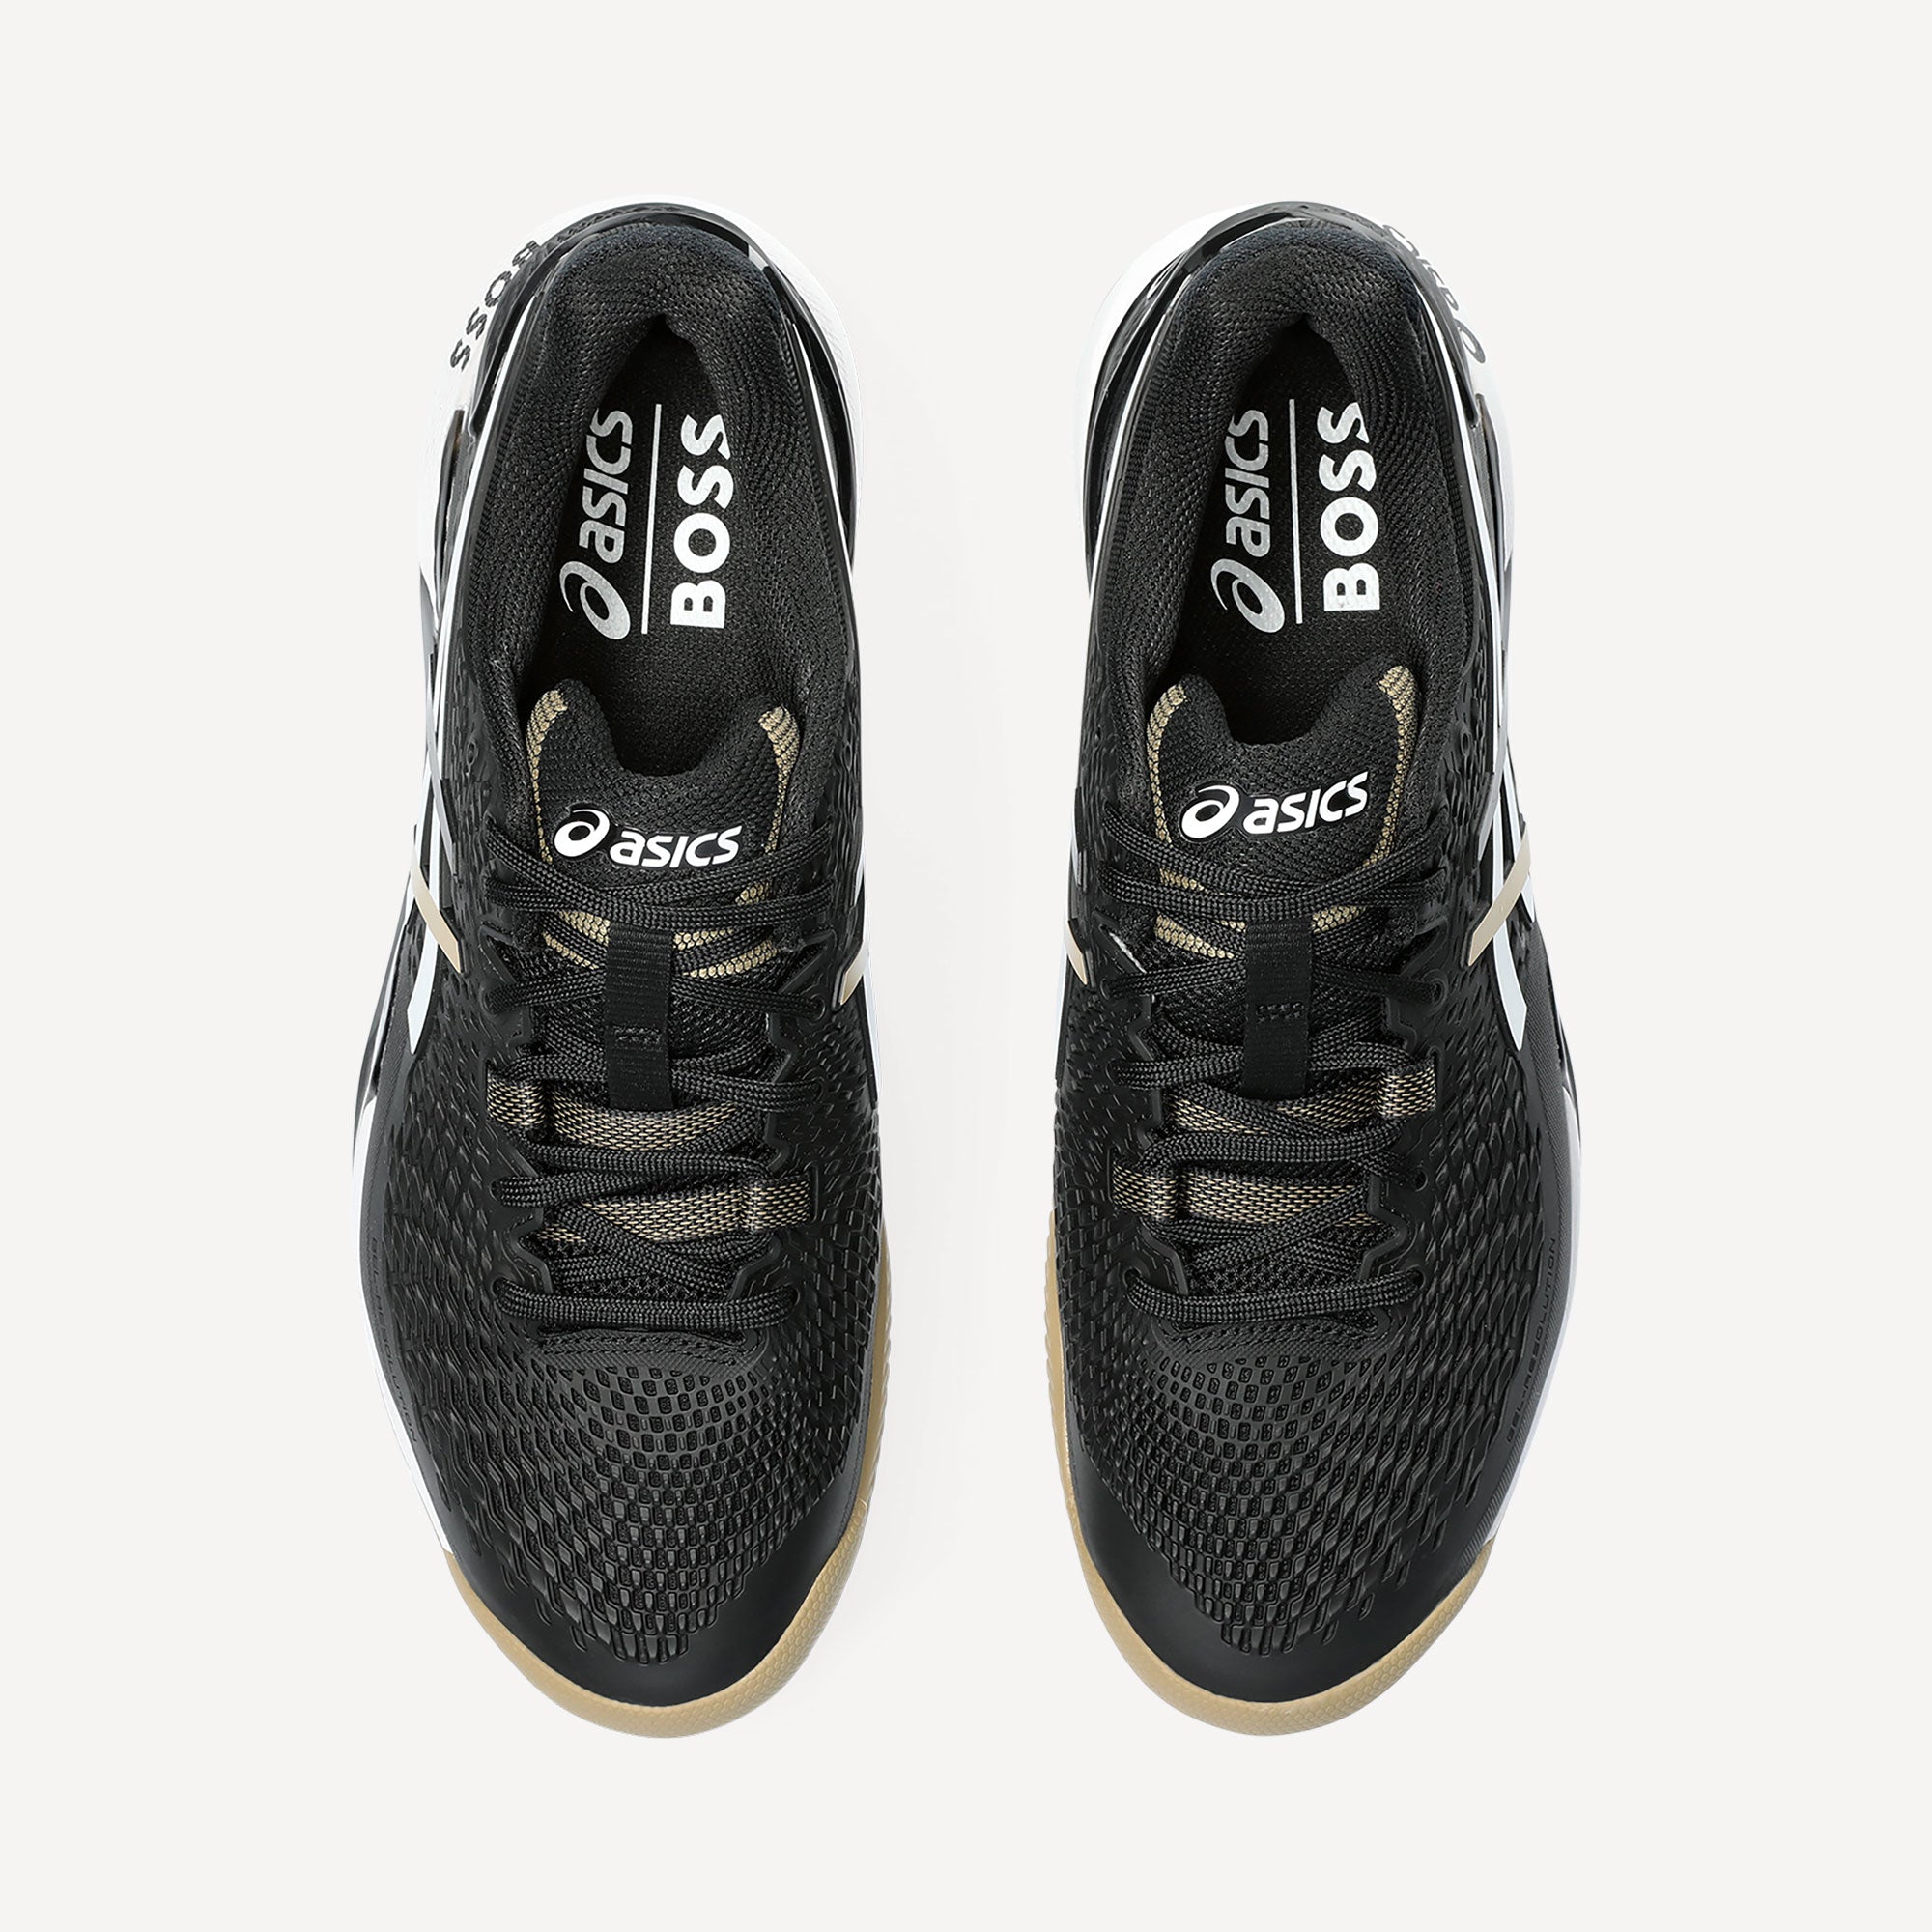 ASICS x BOSS Gel-Resolution 9 Men's Clay Court Tennis Shoes Black (7)